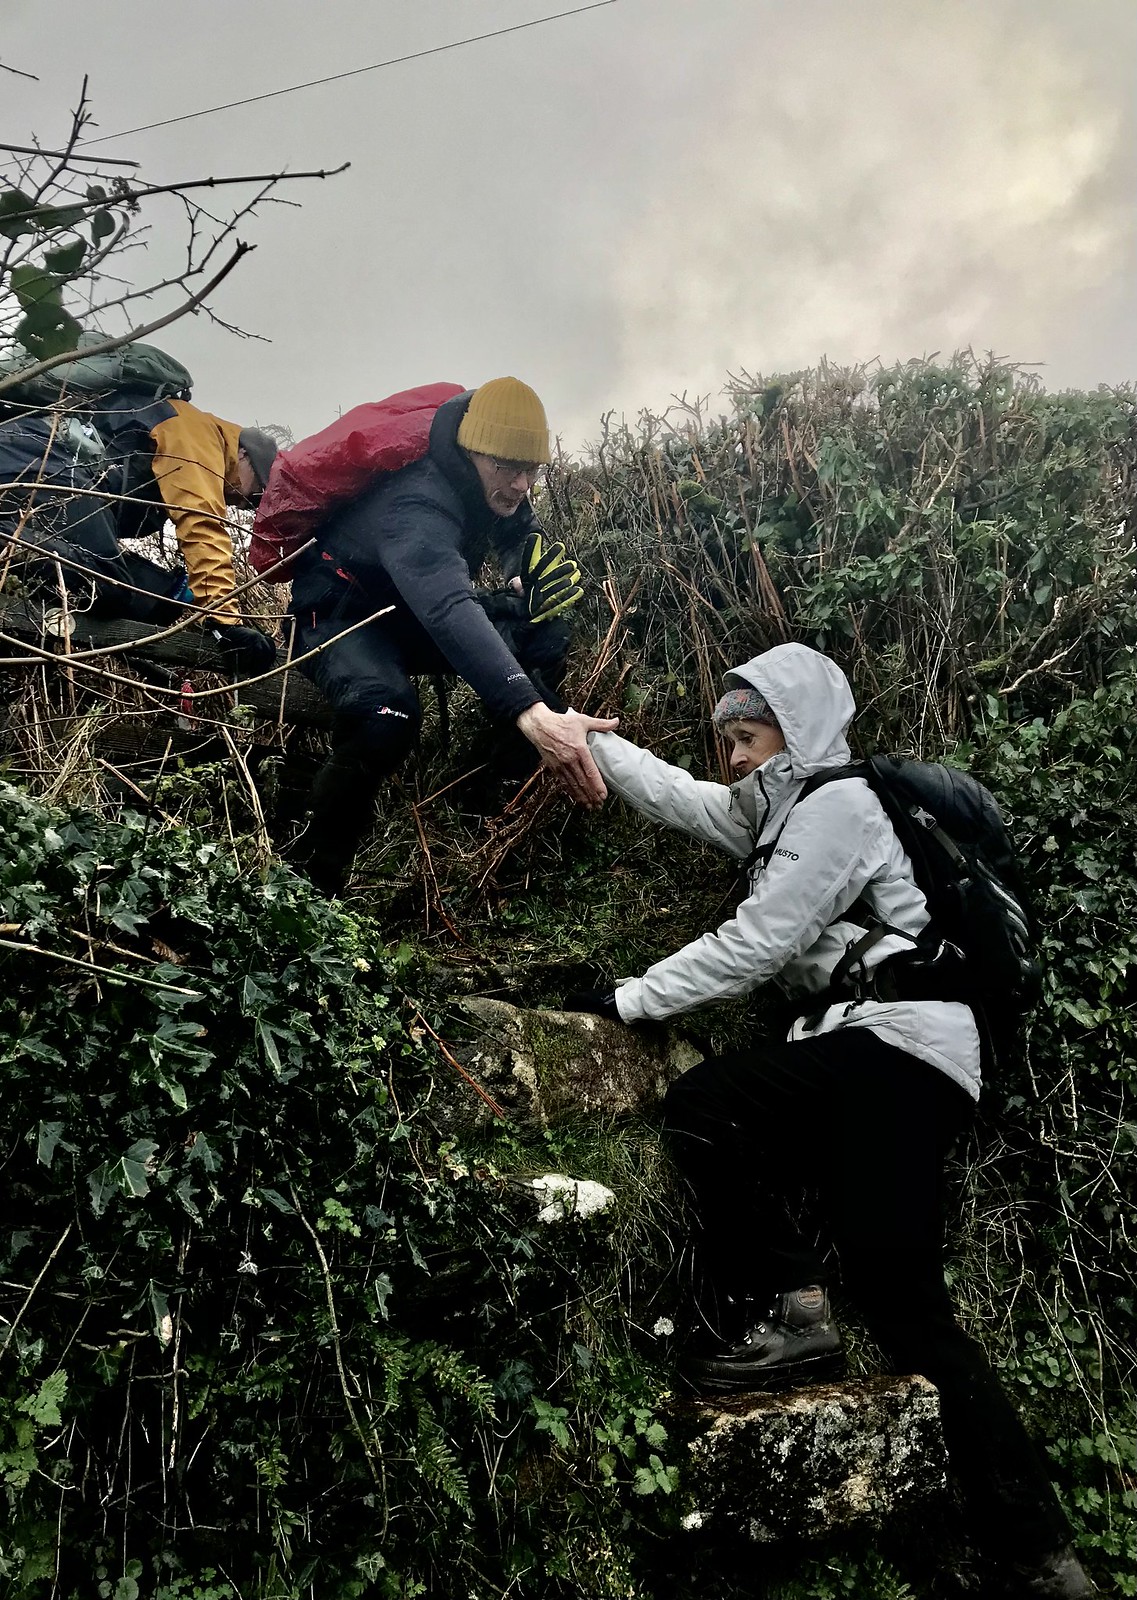 A South Devon Ramblers helping hand….